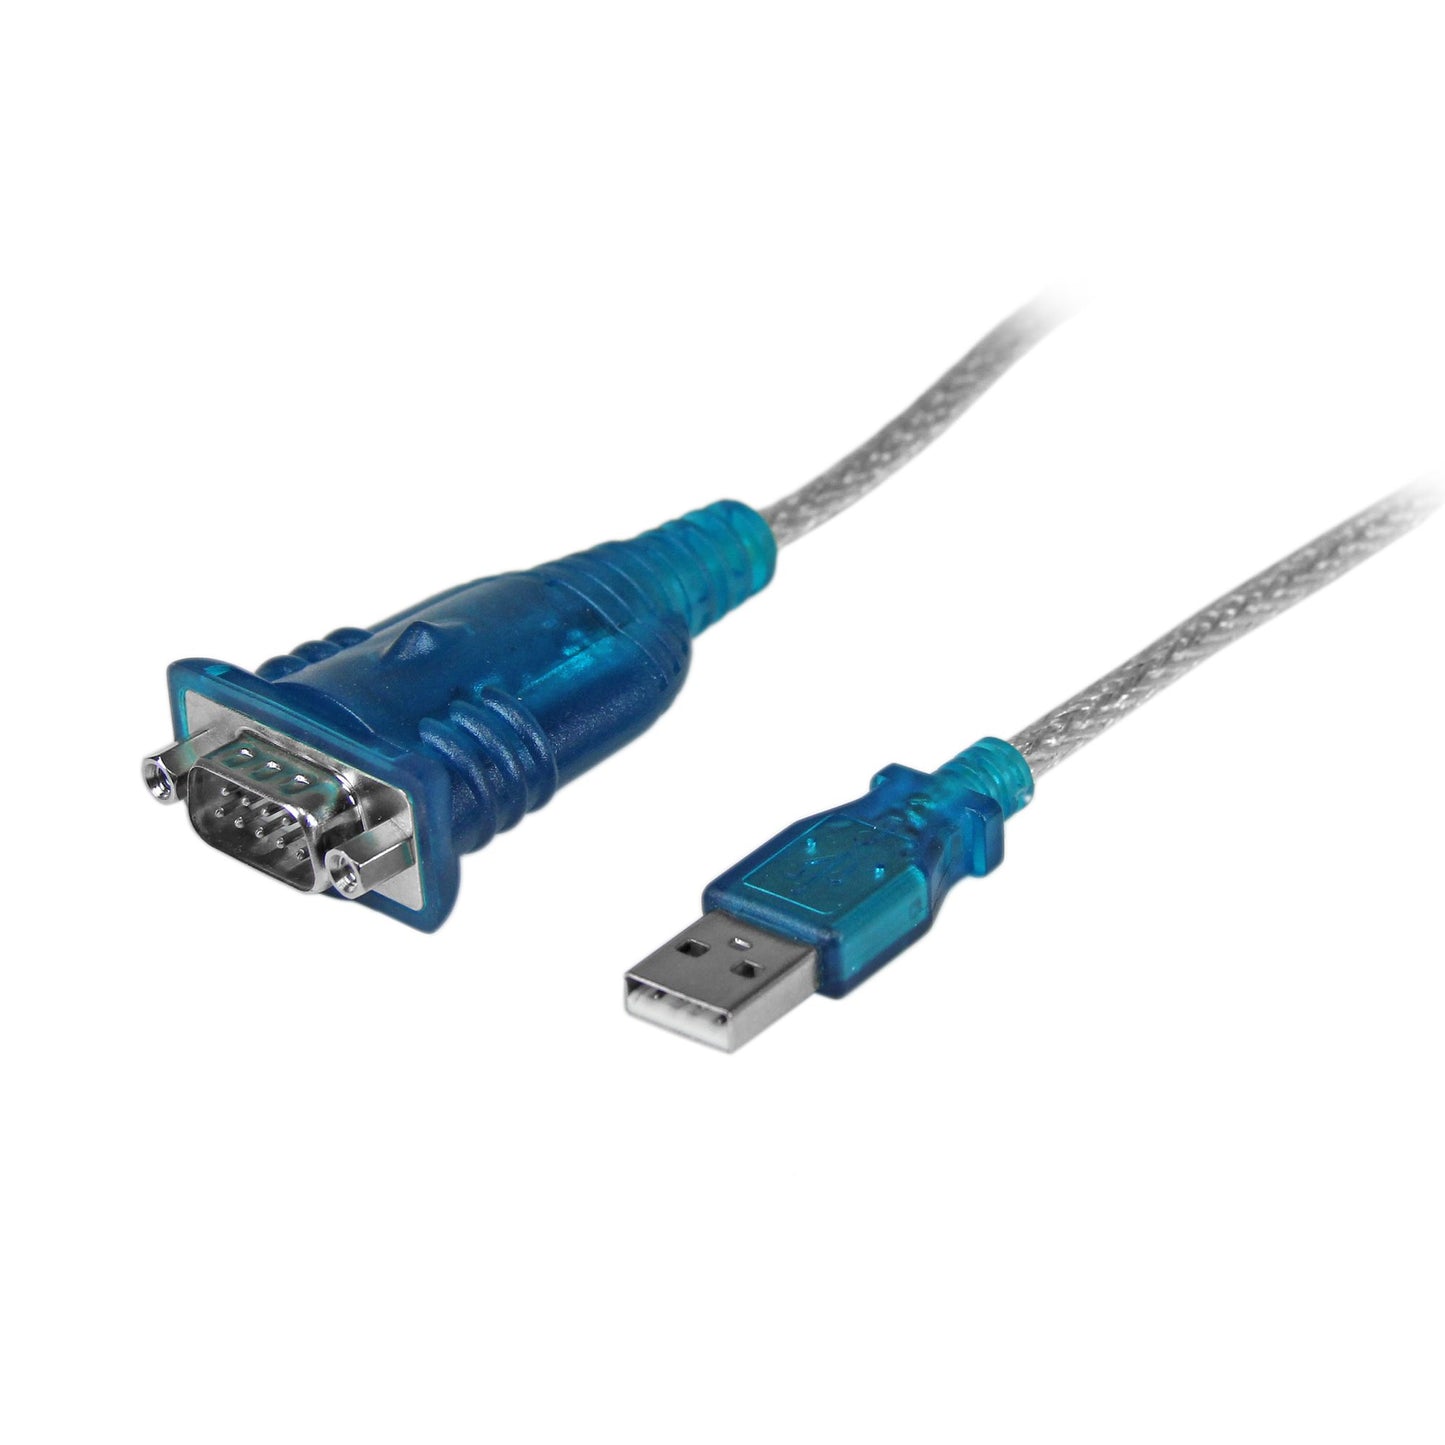 Cable adaptador USB STARTECH a Serie RS232 de 1 Puerto Serial DB9 - Macho a Macho - 1 x 4-pin USB 2.0 Type A - Male - Negro